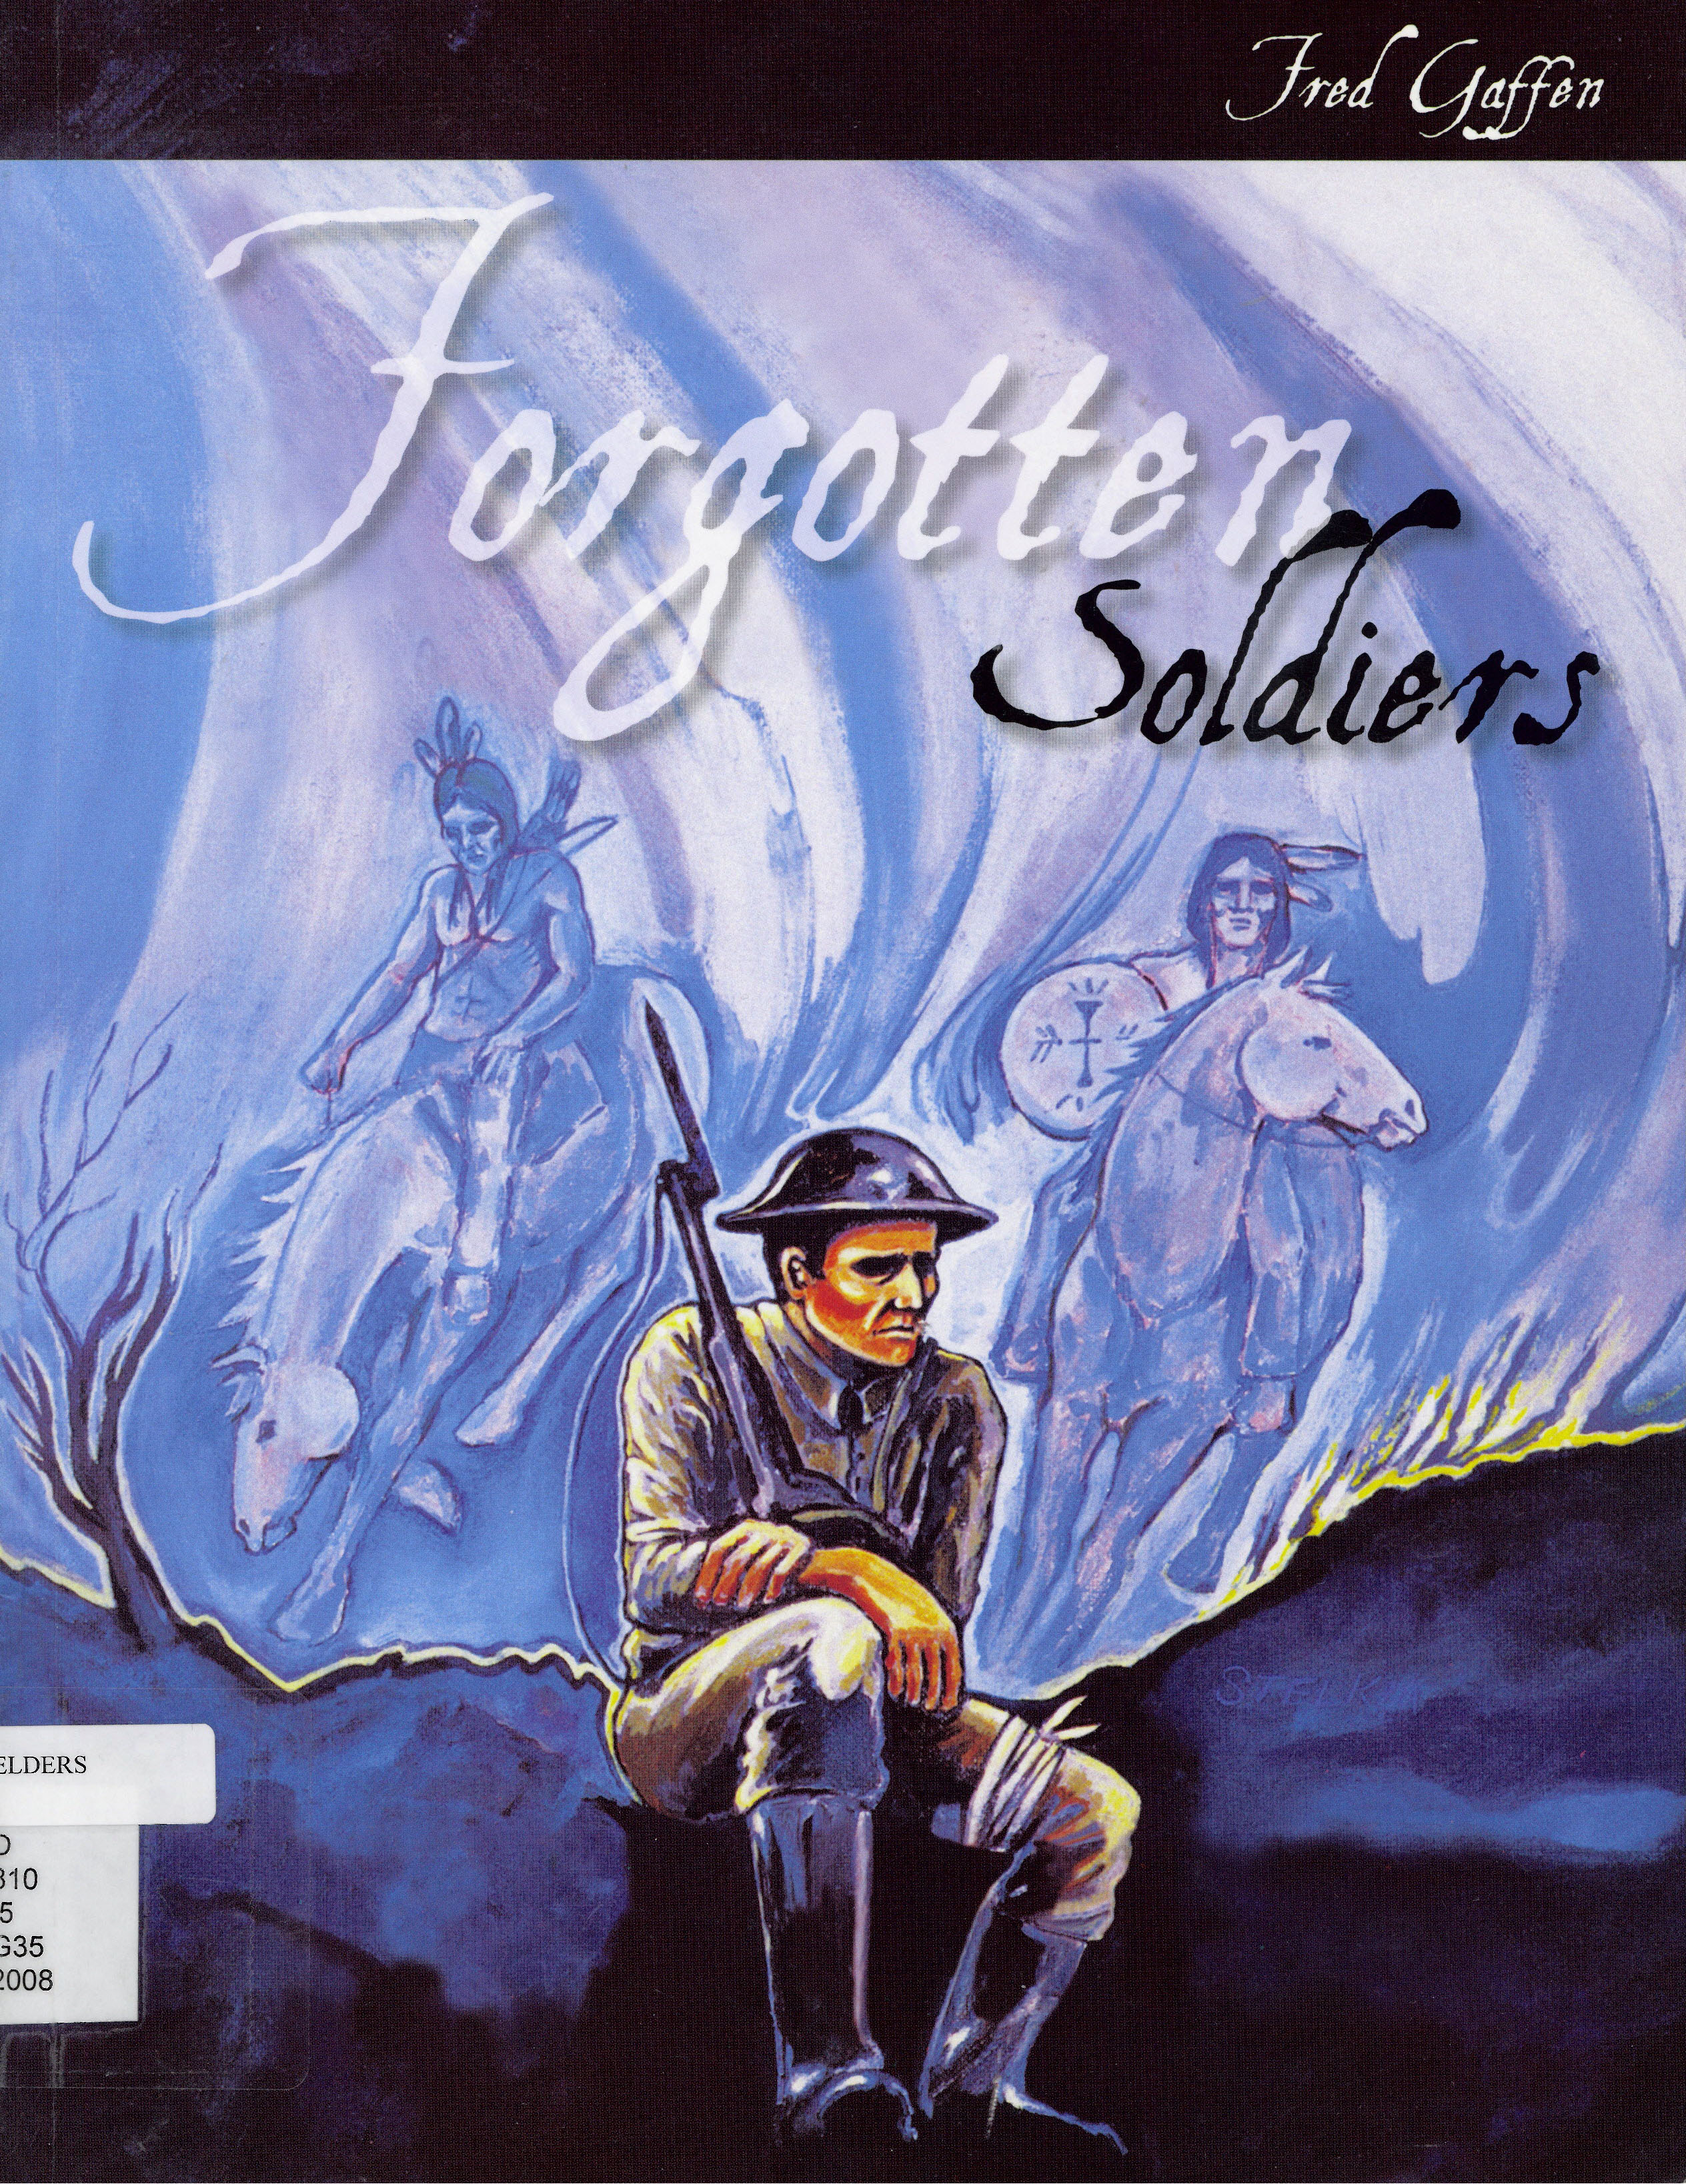 Forgotten soldiers